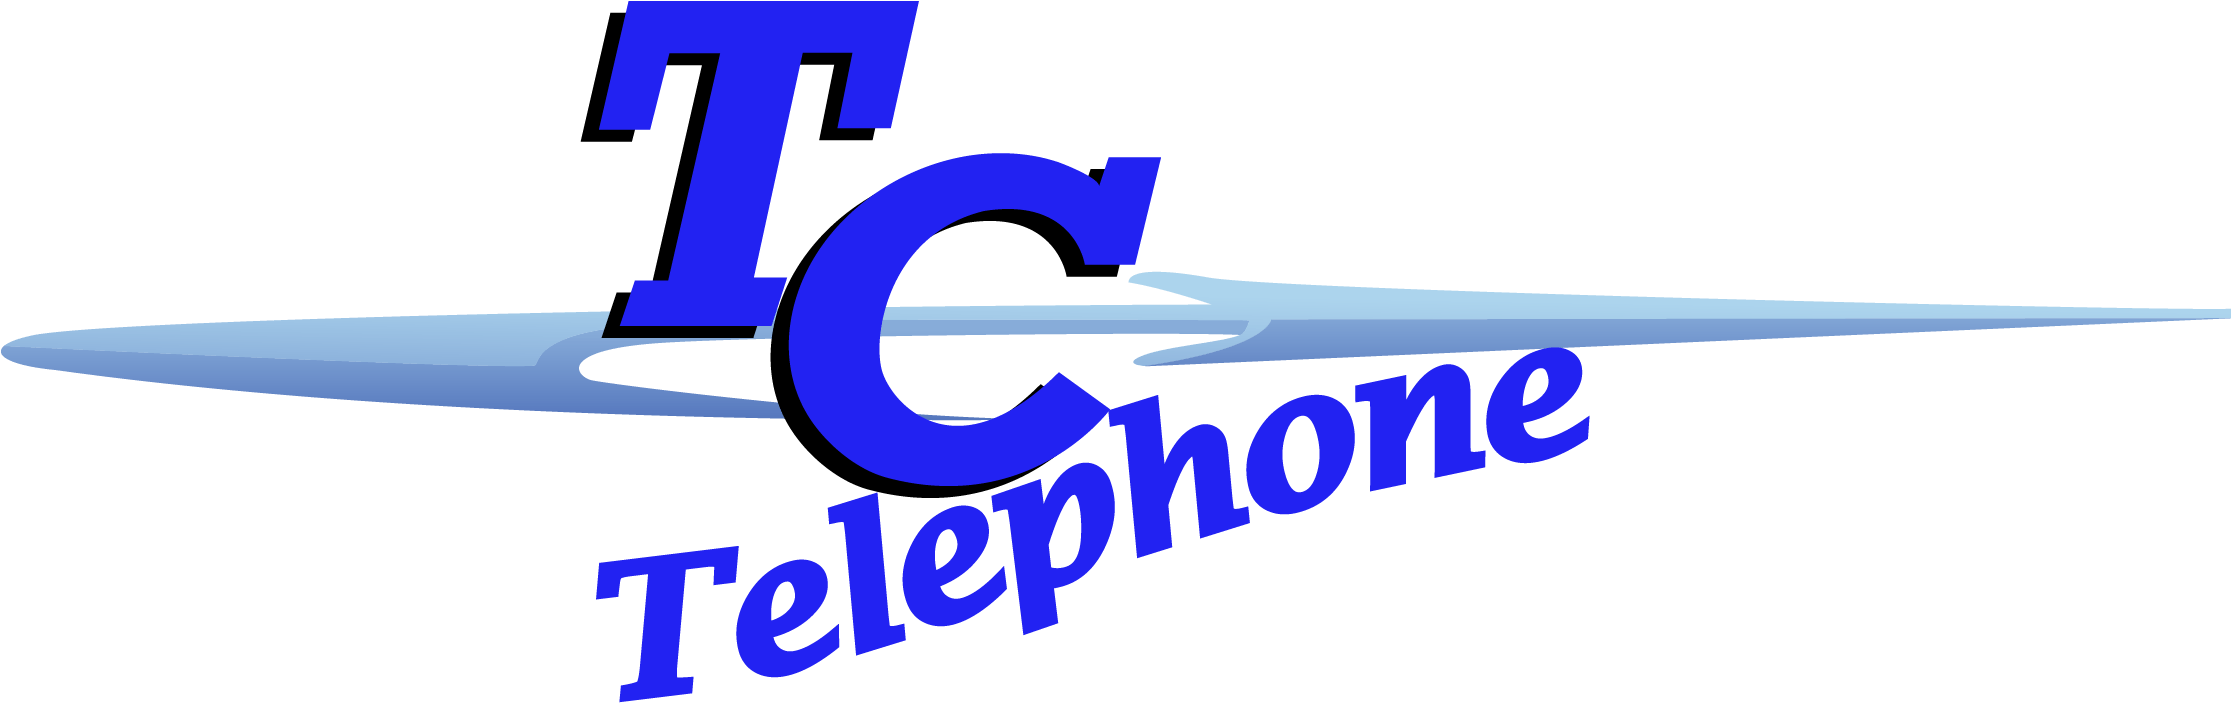 Telephone Transparent Logo - Download HD Tc Telephone Logo Telephone Transparent PNG Image